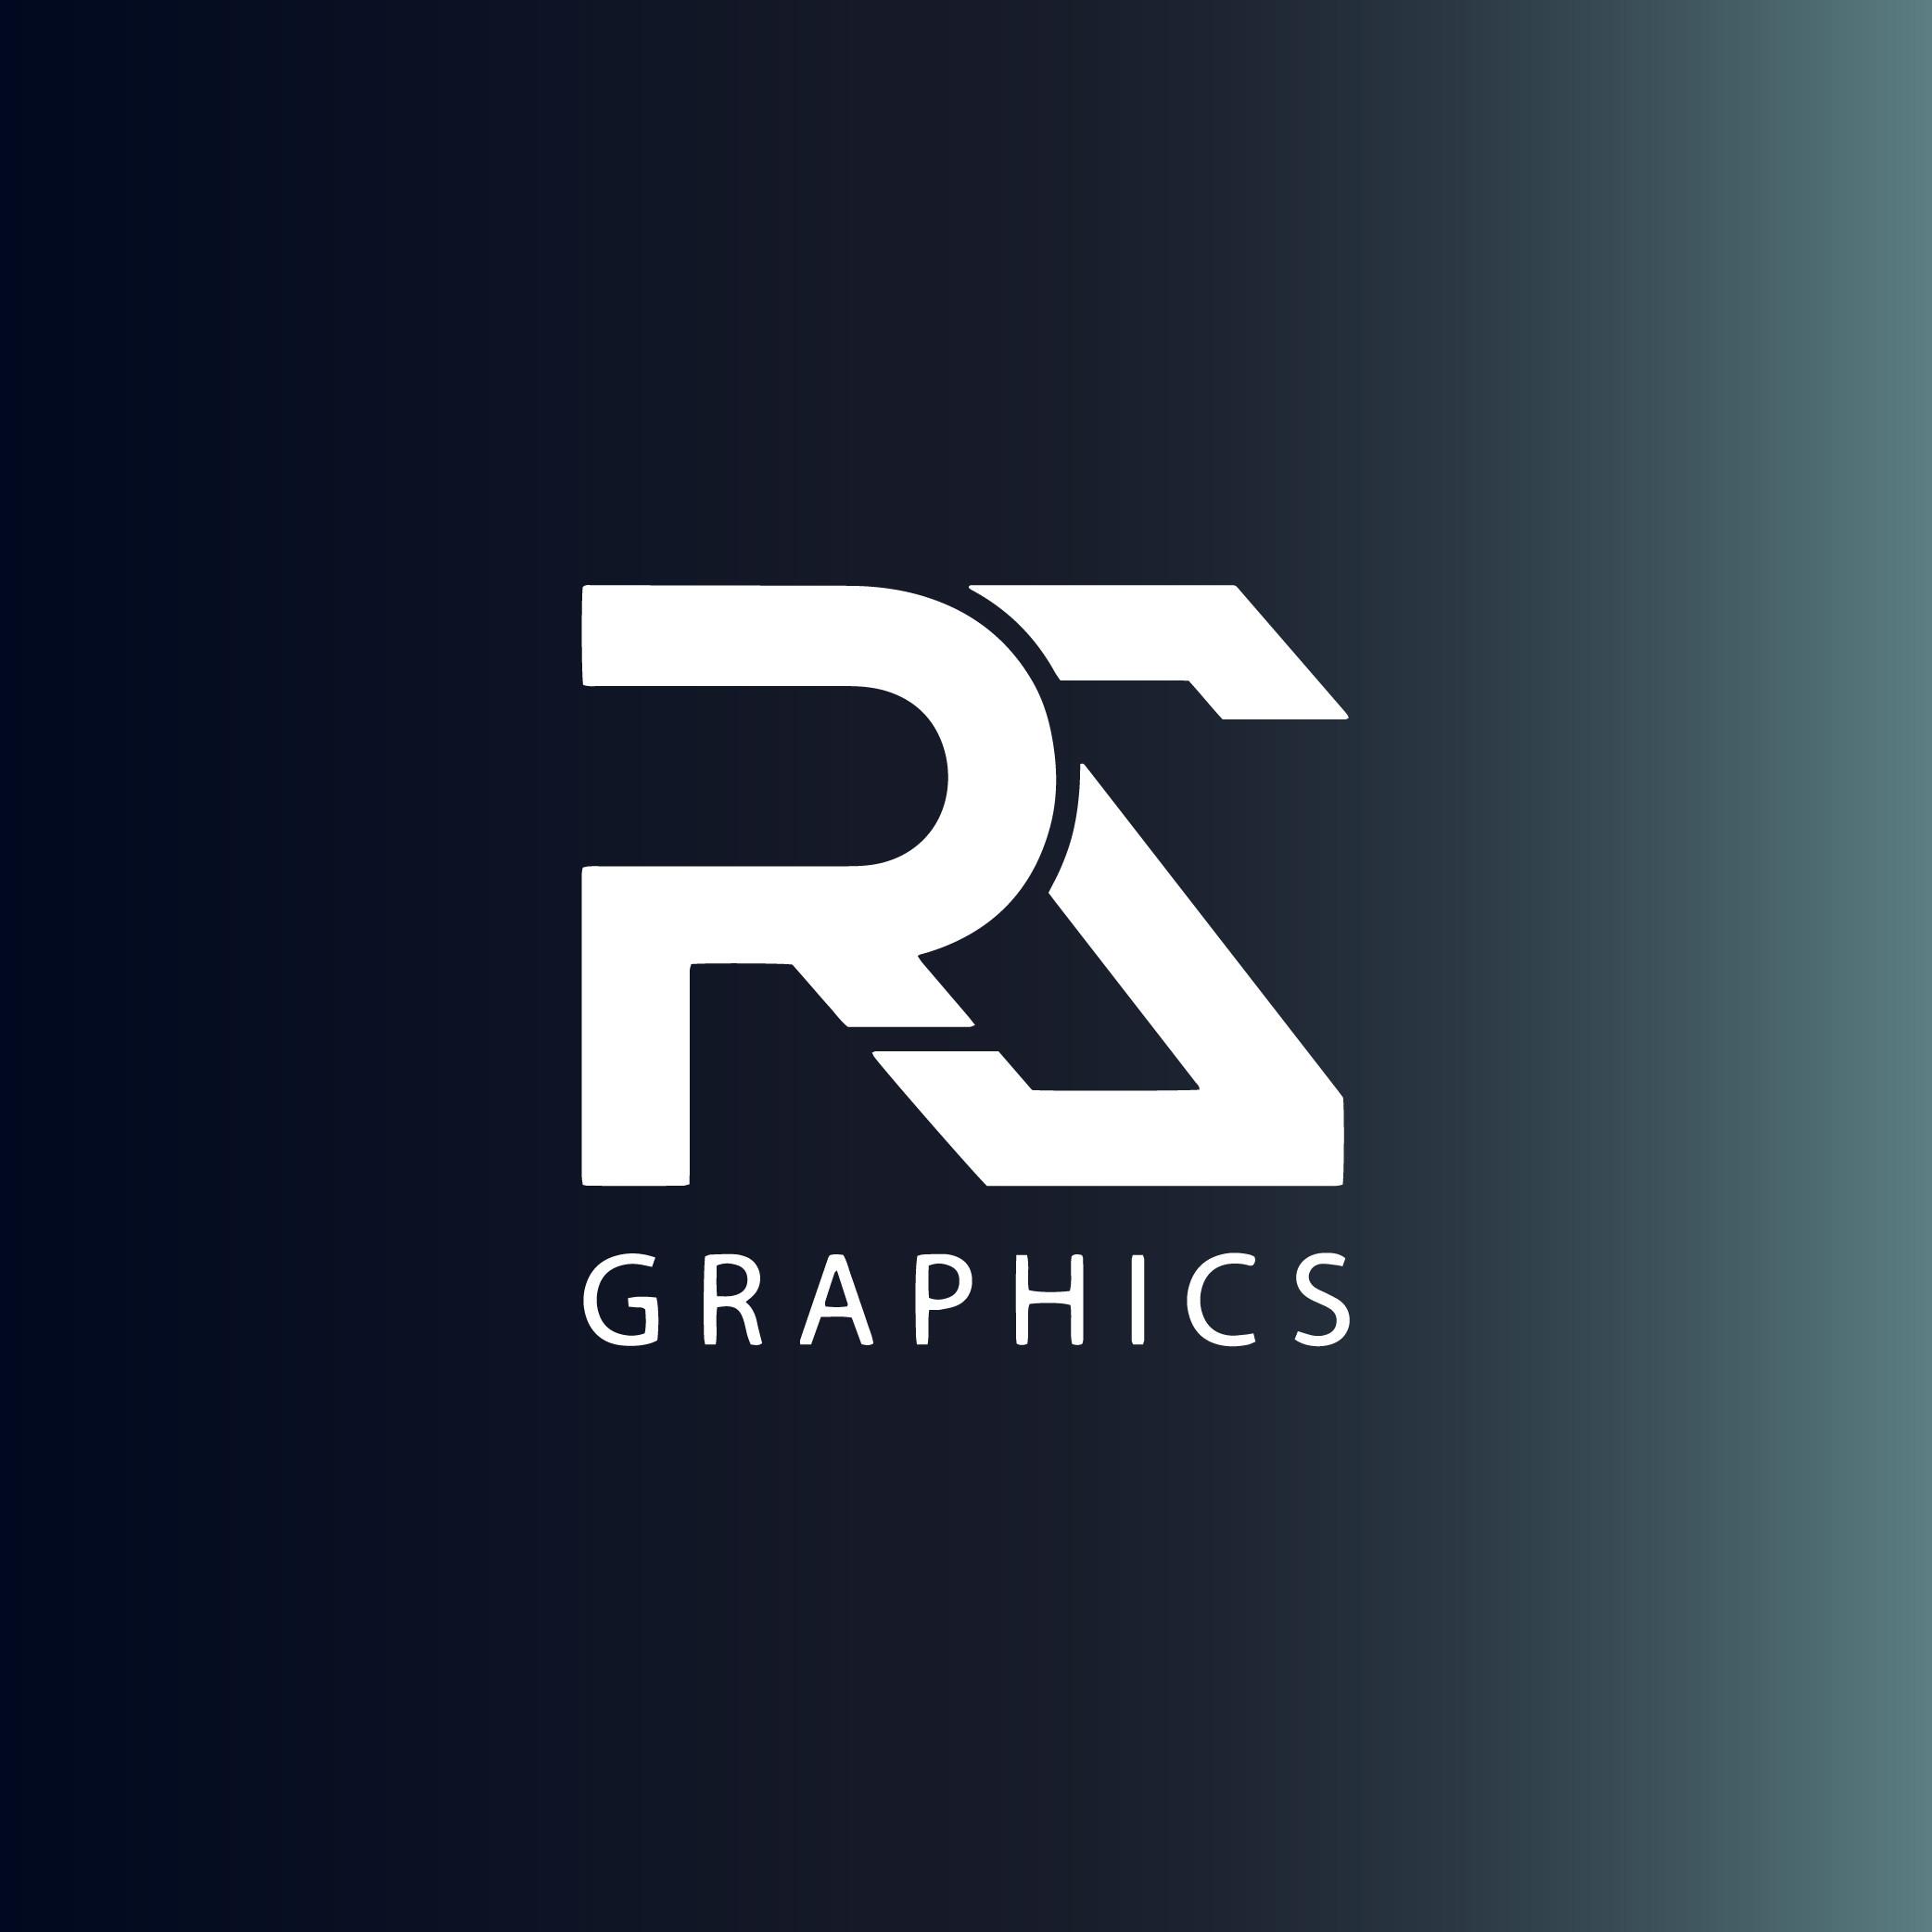 RS Graphics